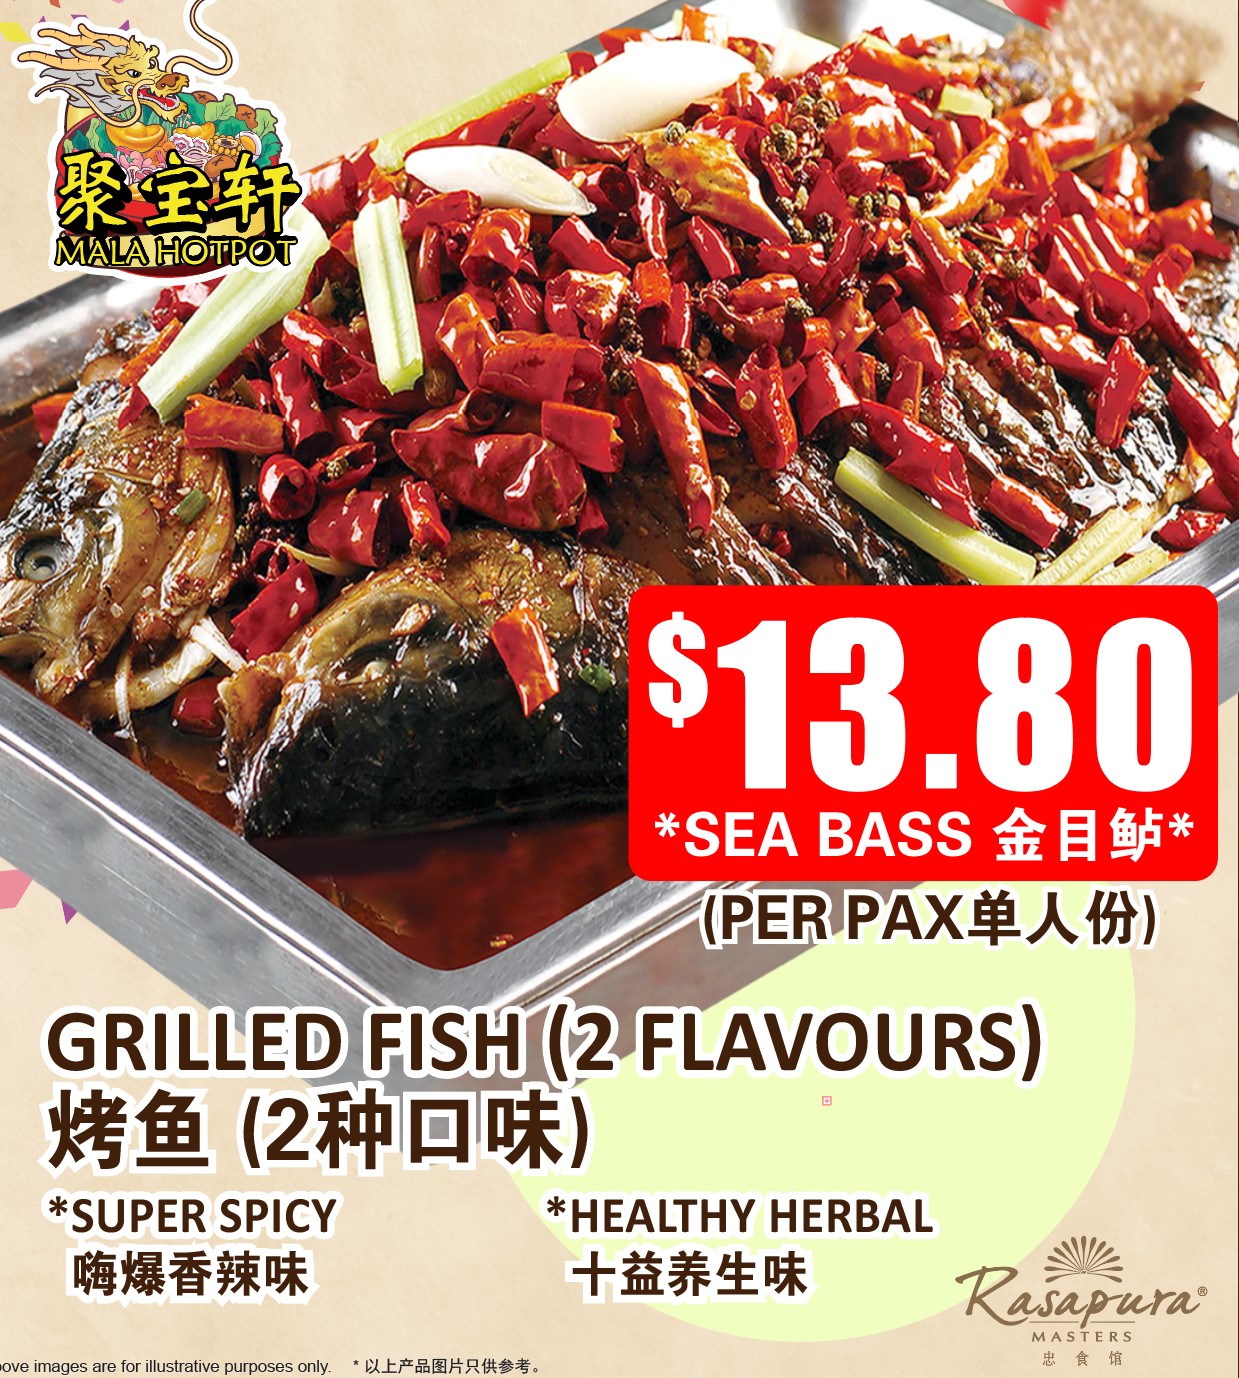 Ju Bao Xuan Mala Hotpot - grilled fish promo poster